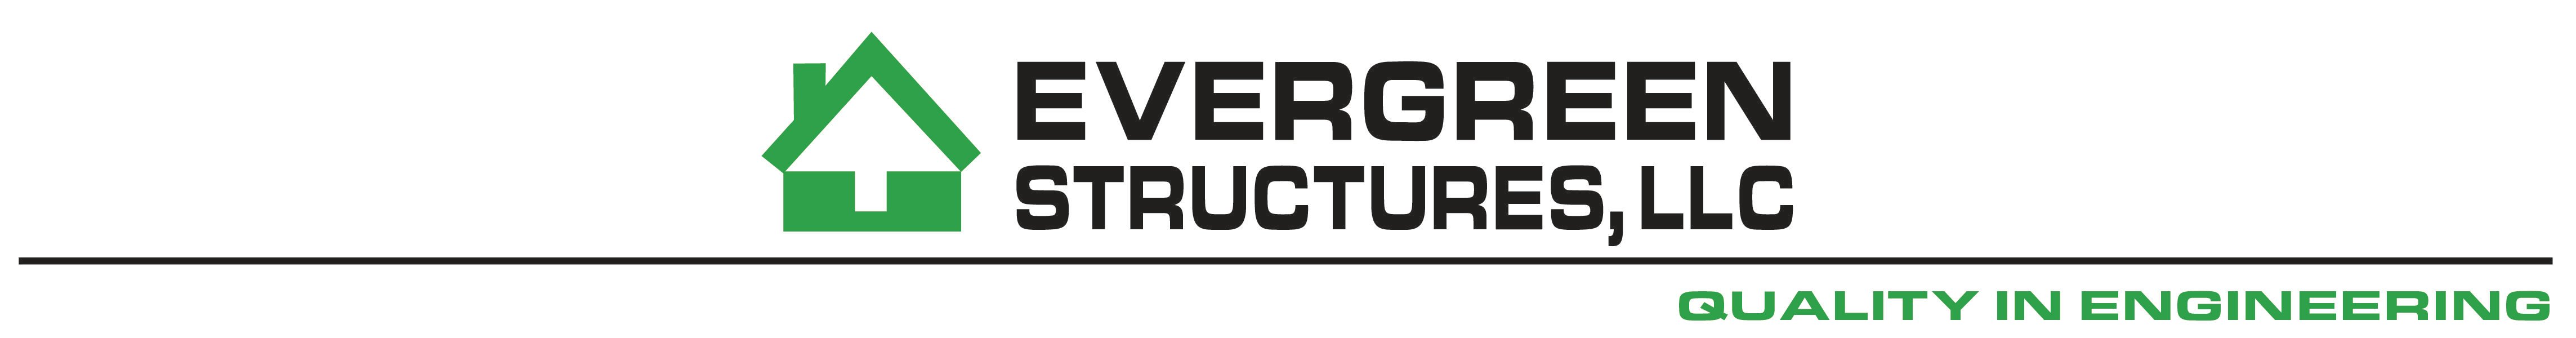 Evergreen Structures, LLC Logo